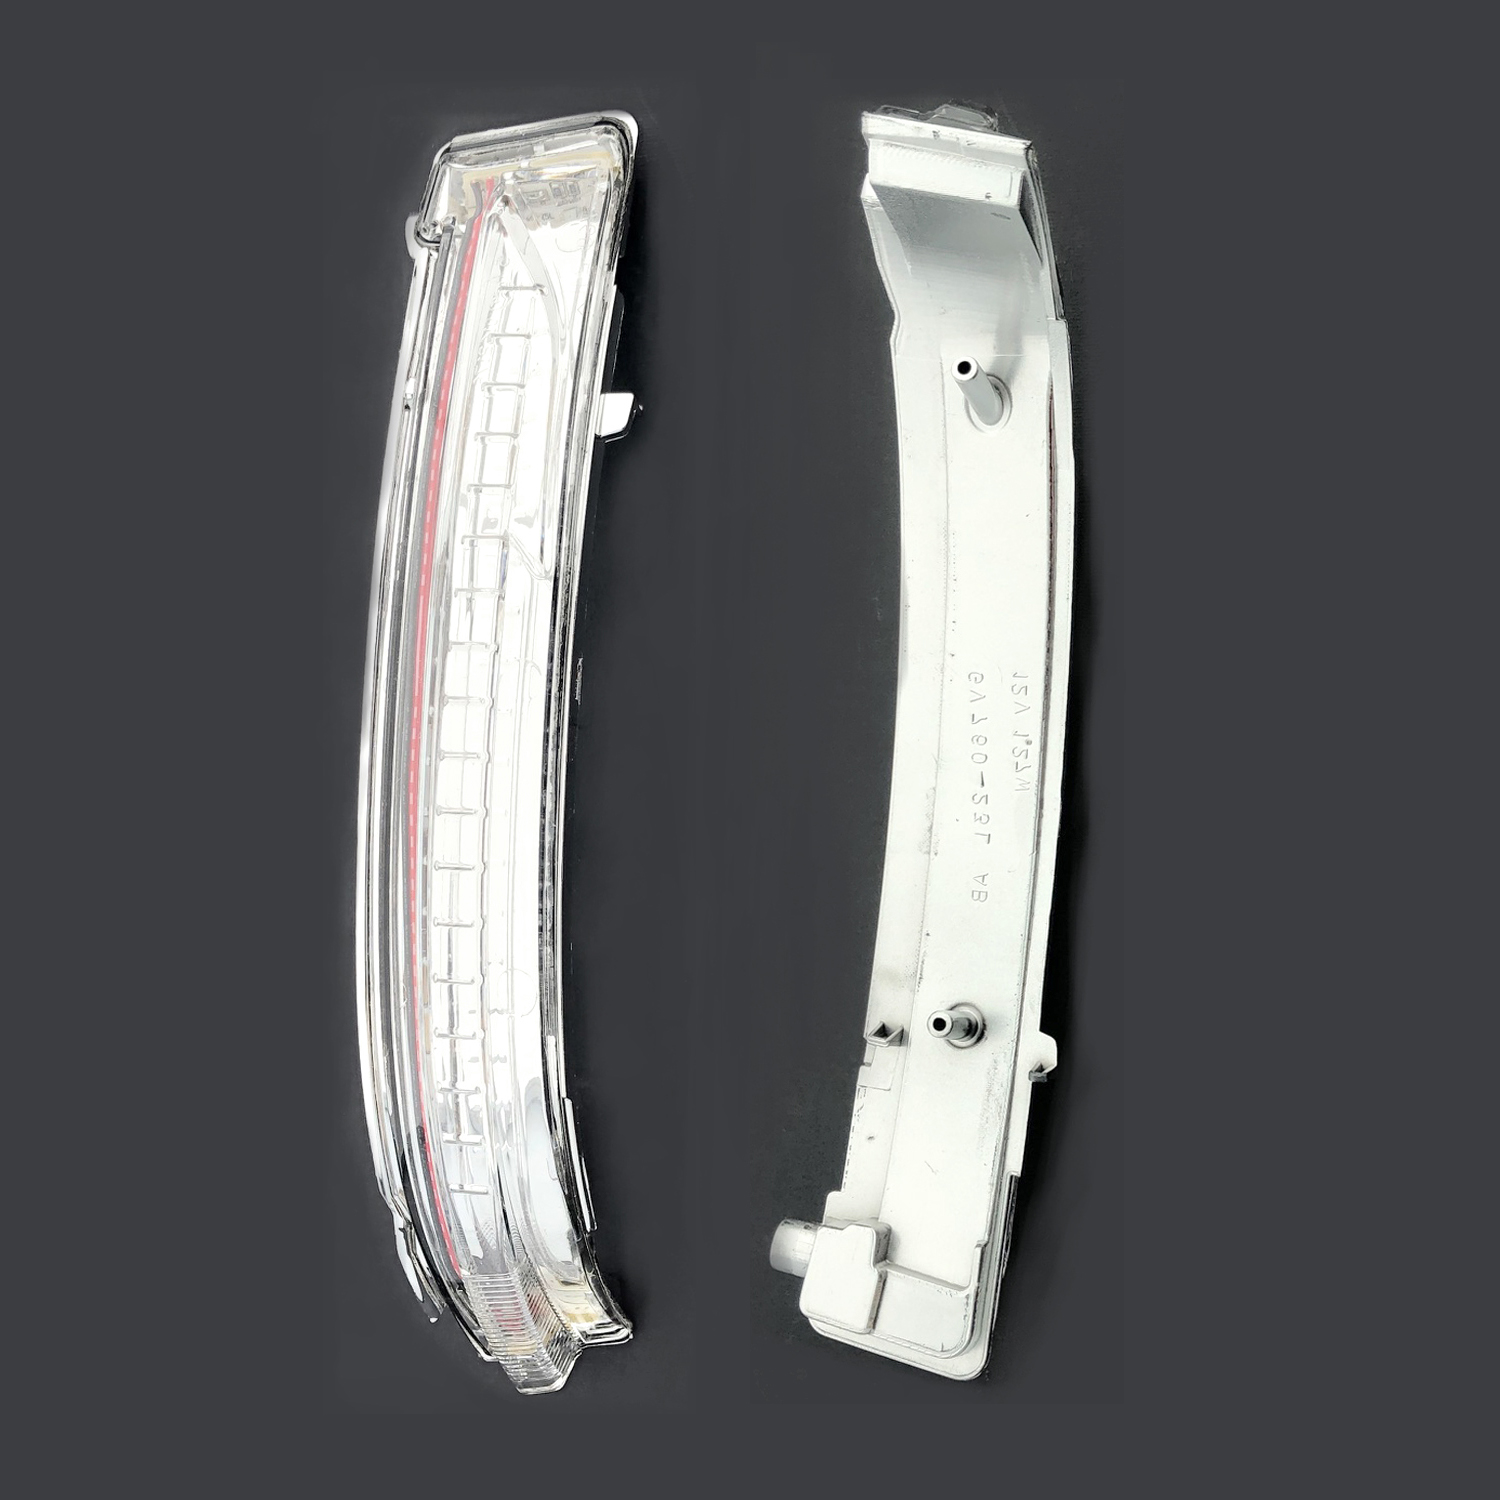 Nissan Juke Wing Mirror Indicator RIGHT HAND ( UK Driver Side ) 2015 to 2020 – Wing Mirror Indicator ( Fits for F15 Model )